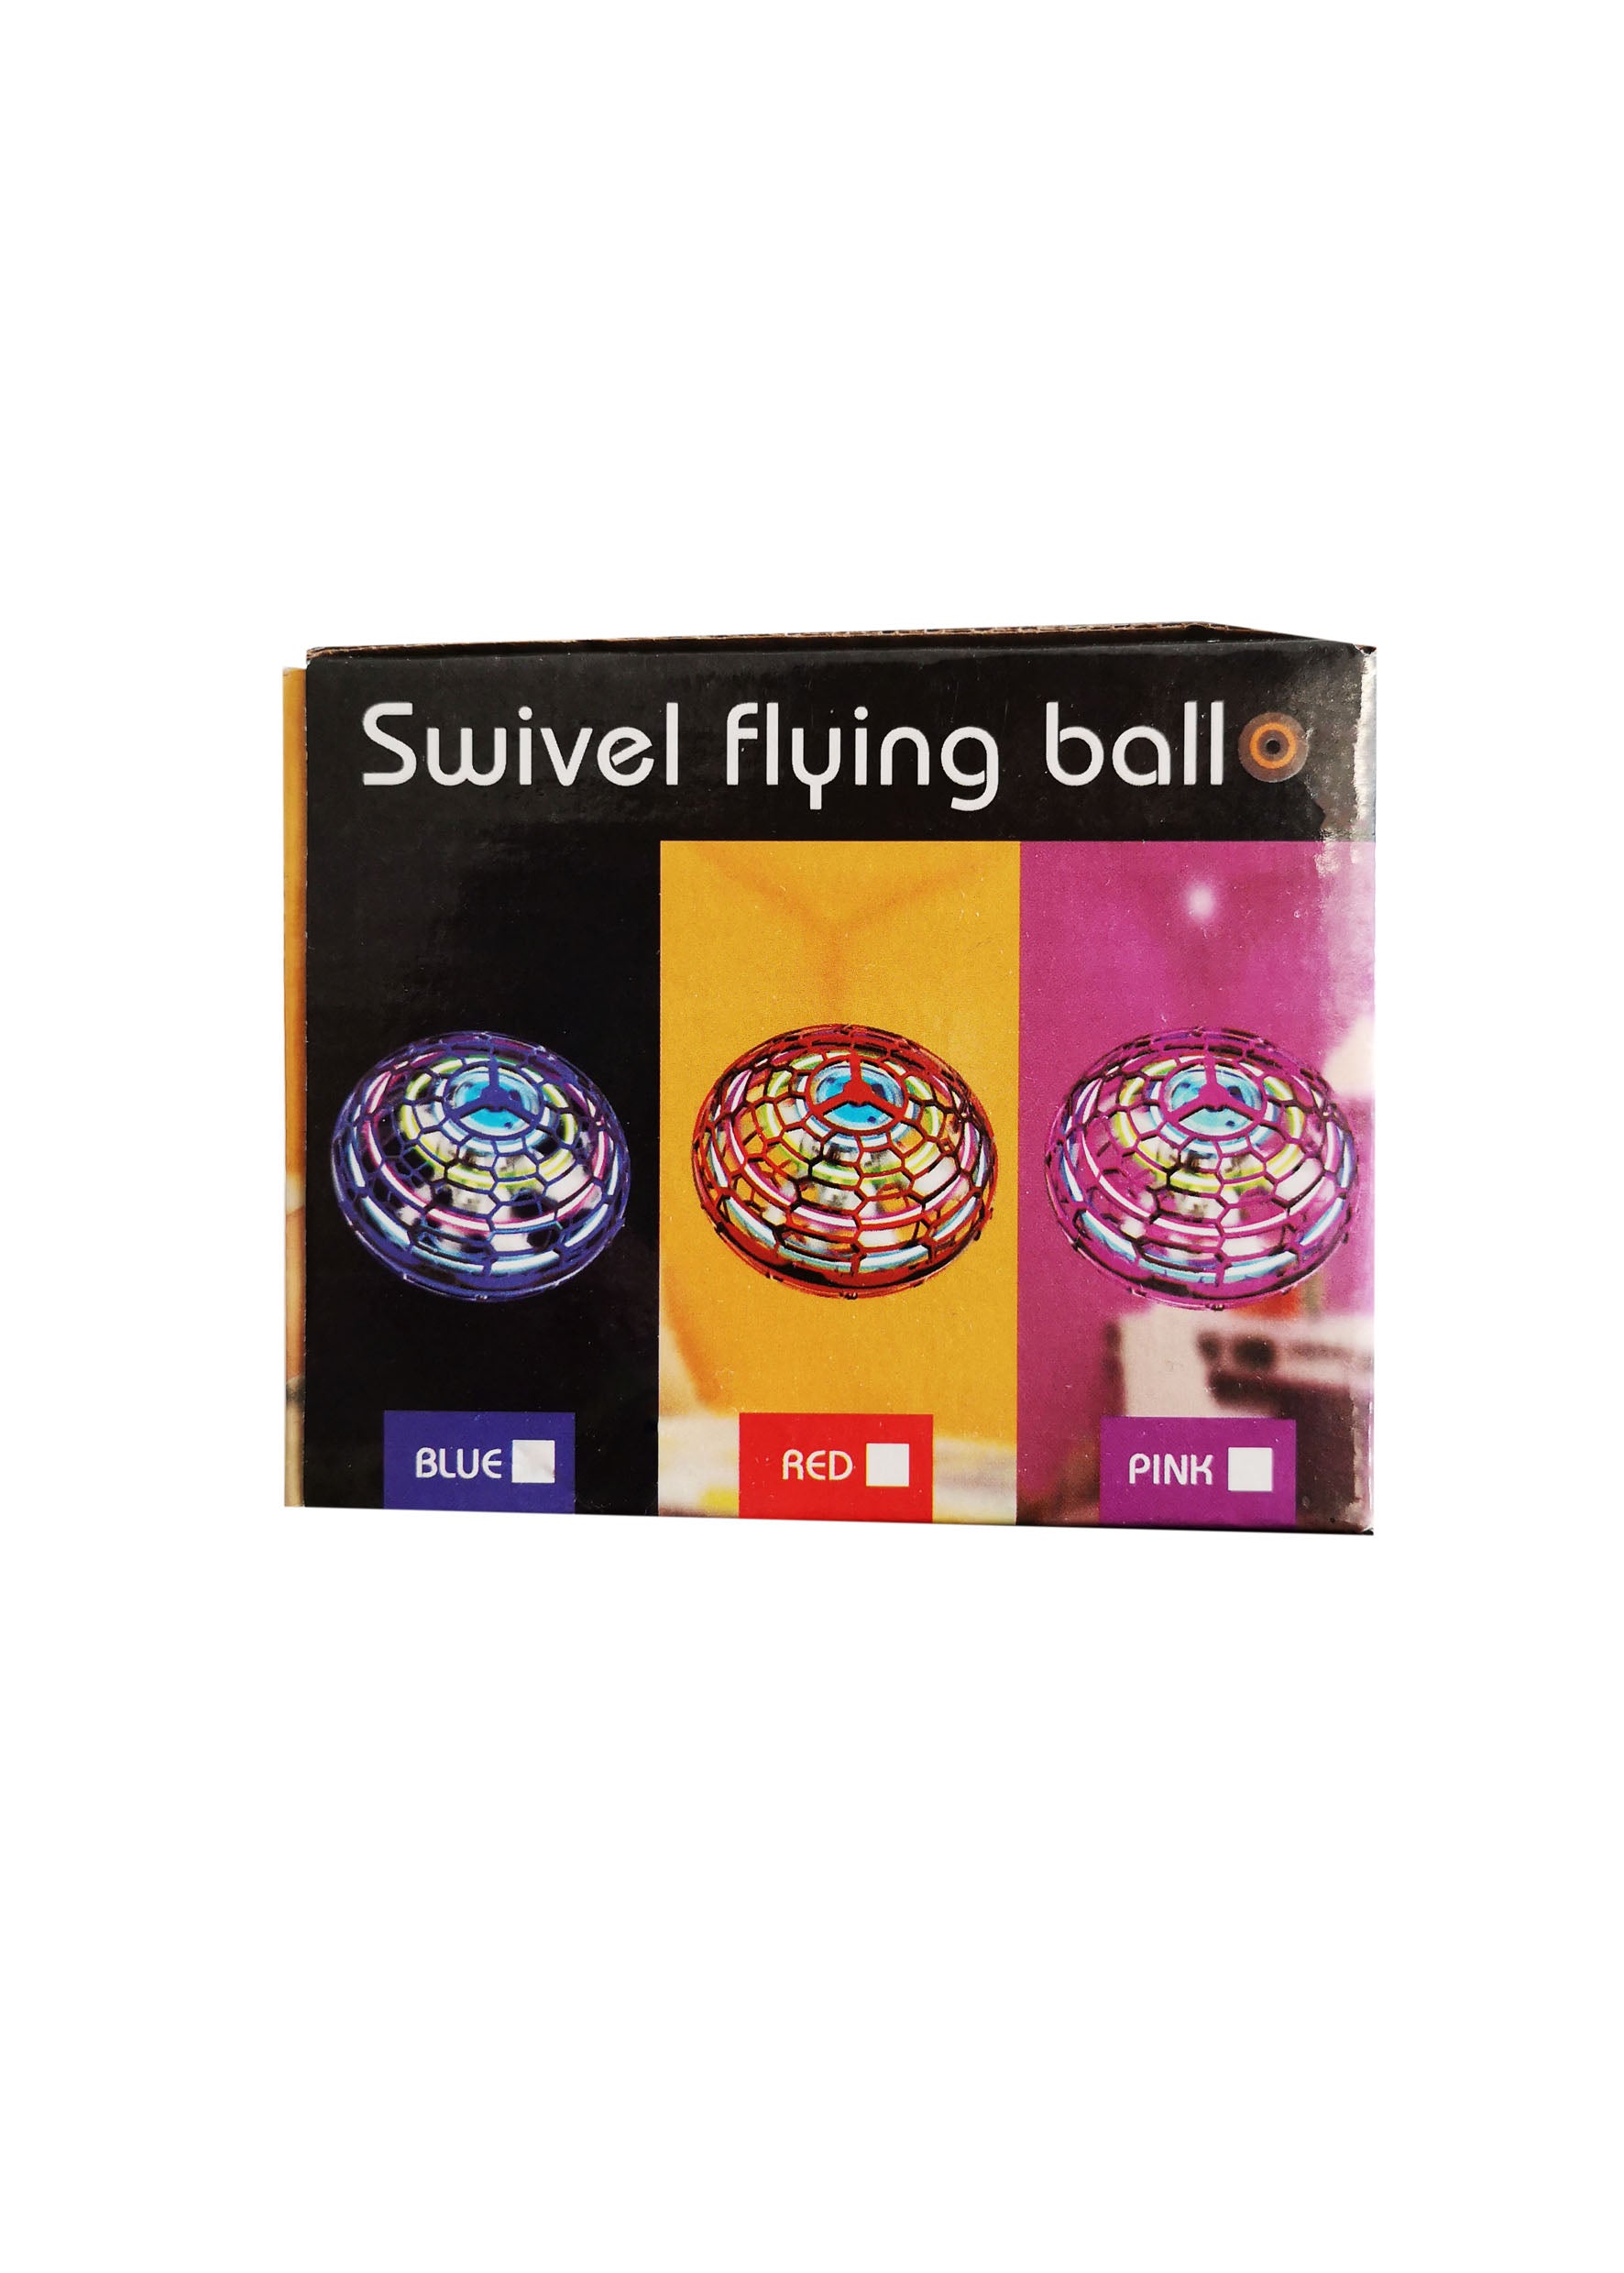 Boule Volante Lumineuse, Flying Ball Hover Ball, LED Balle Air